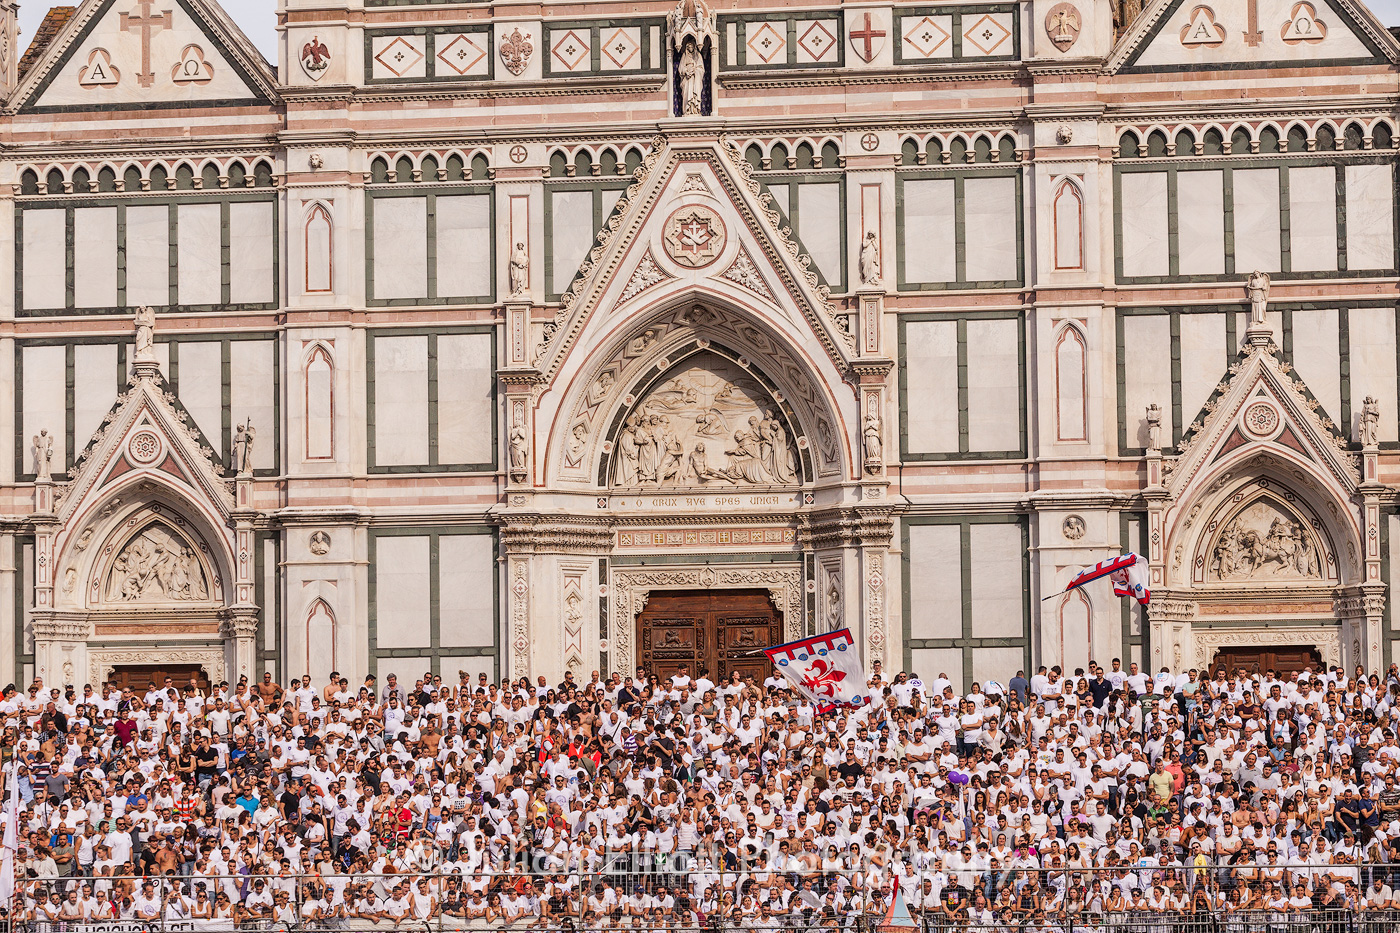 Calcio Storico in Florence